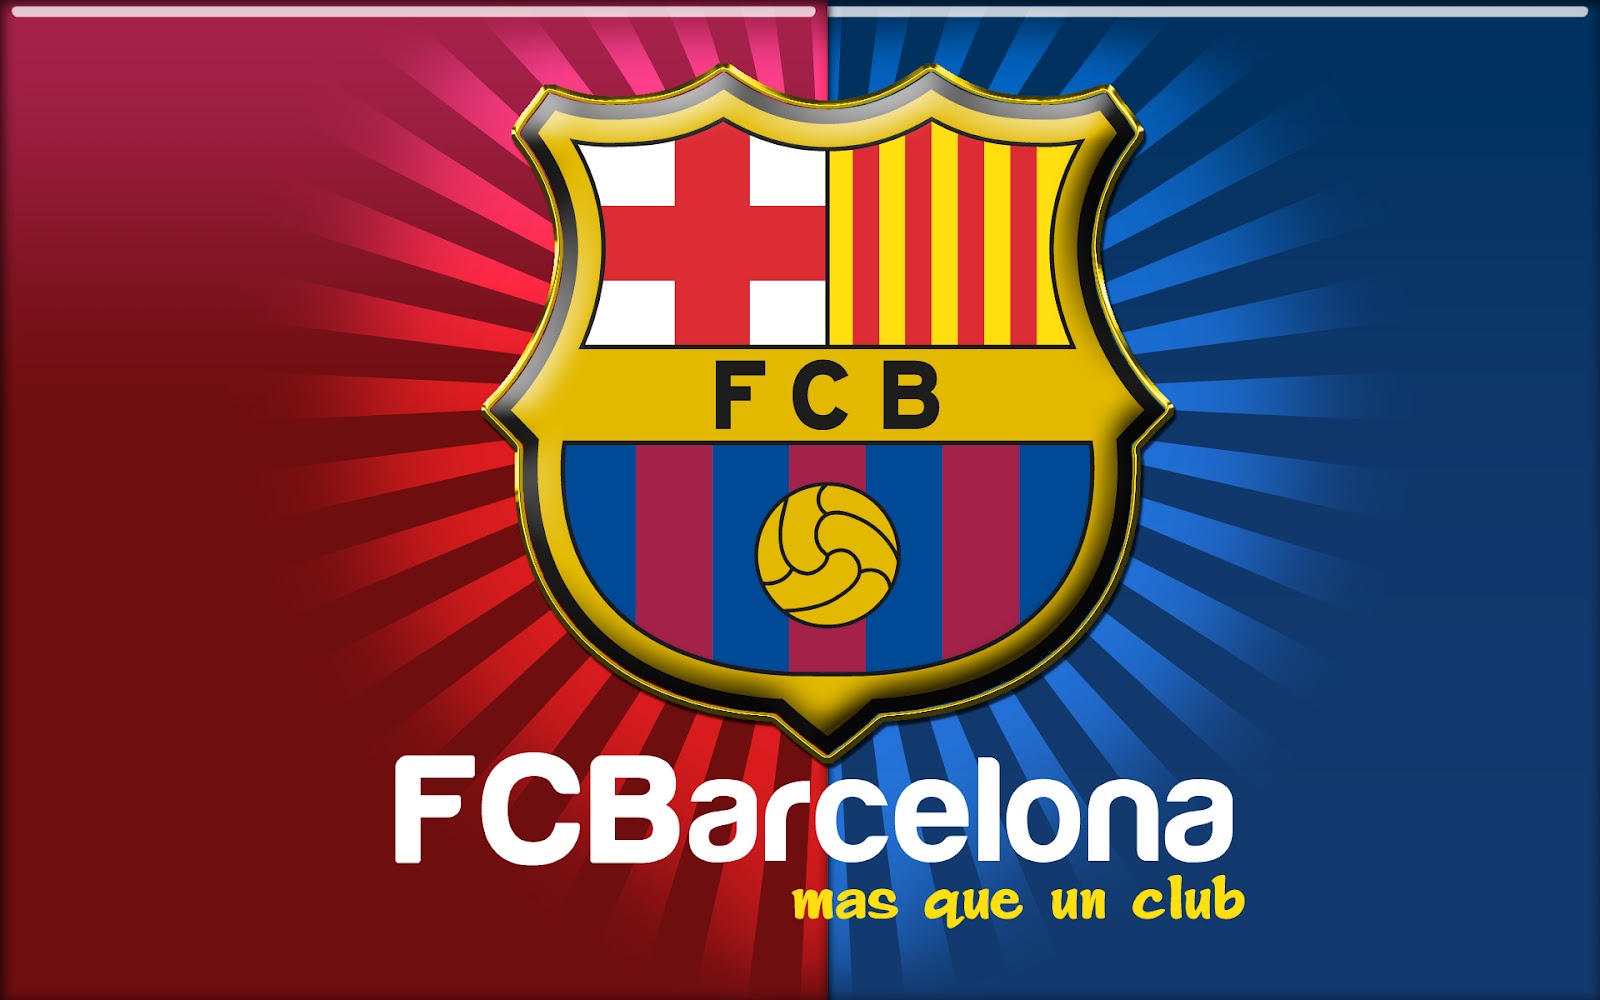 http://3.bp.blogspot.com/-7IX2AbKJ5ec/UBuONmljyEI/AAAAAAAASO8/MpvfVR4zjZo/s1600/fc-barcelona-logo_romania-megalitica.jpg